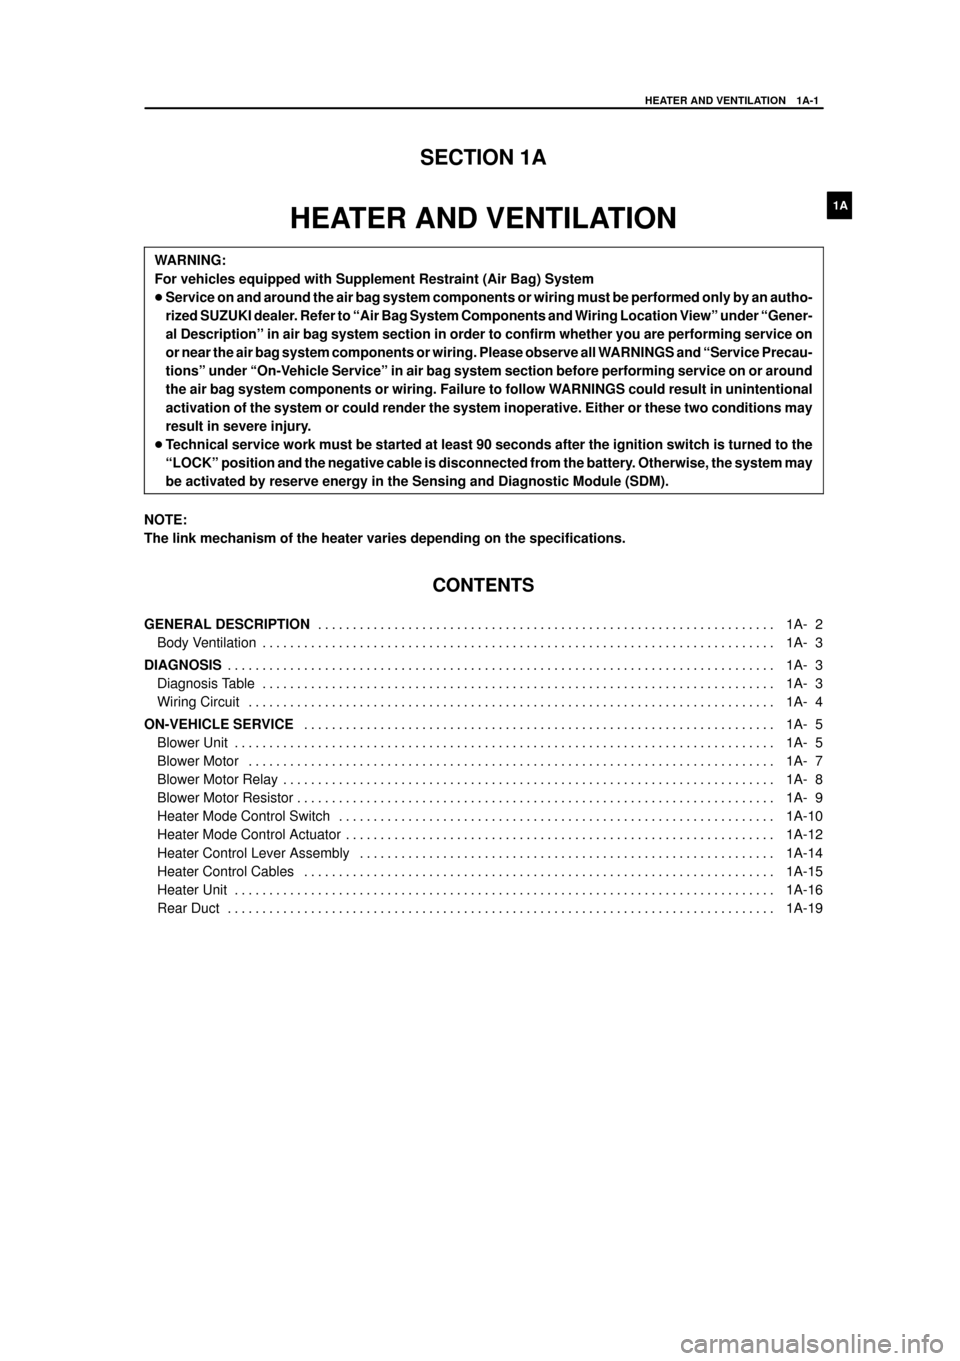 SUZUKI GRAND VITARA 2003 2.G Service Workshop Manual YH4
GRAND
VITARA
1A
HEATER AND VENTILATION 1A-1
SECTION 1A
HEATER AND VENTILATION
WARNING:
For vehicles equipped with Supplement Restraint (Air Bag) System
Service on and around the air bag system co